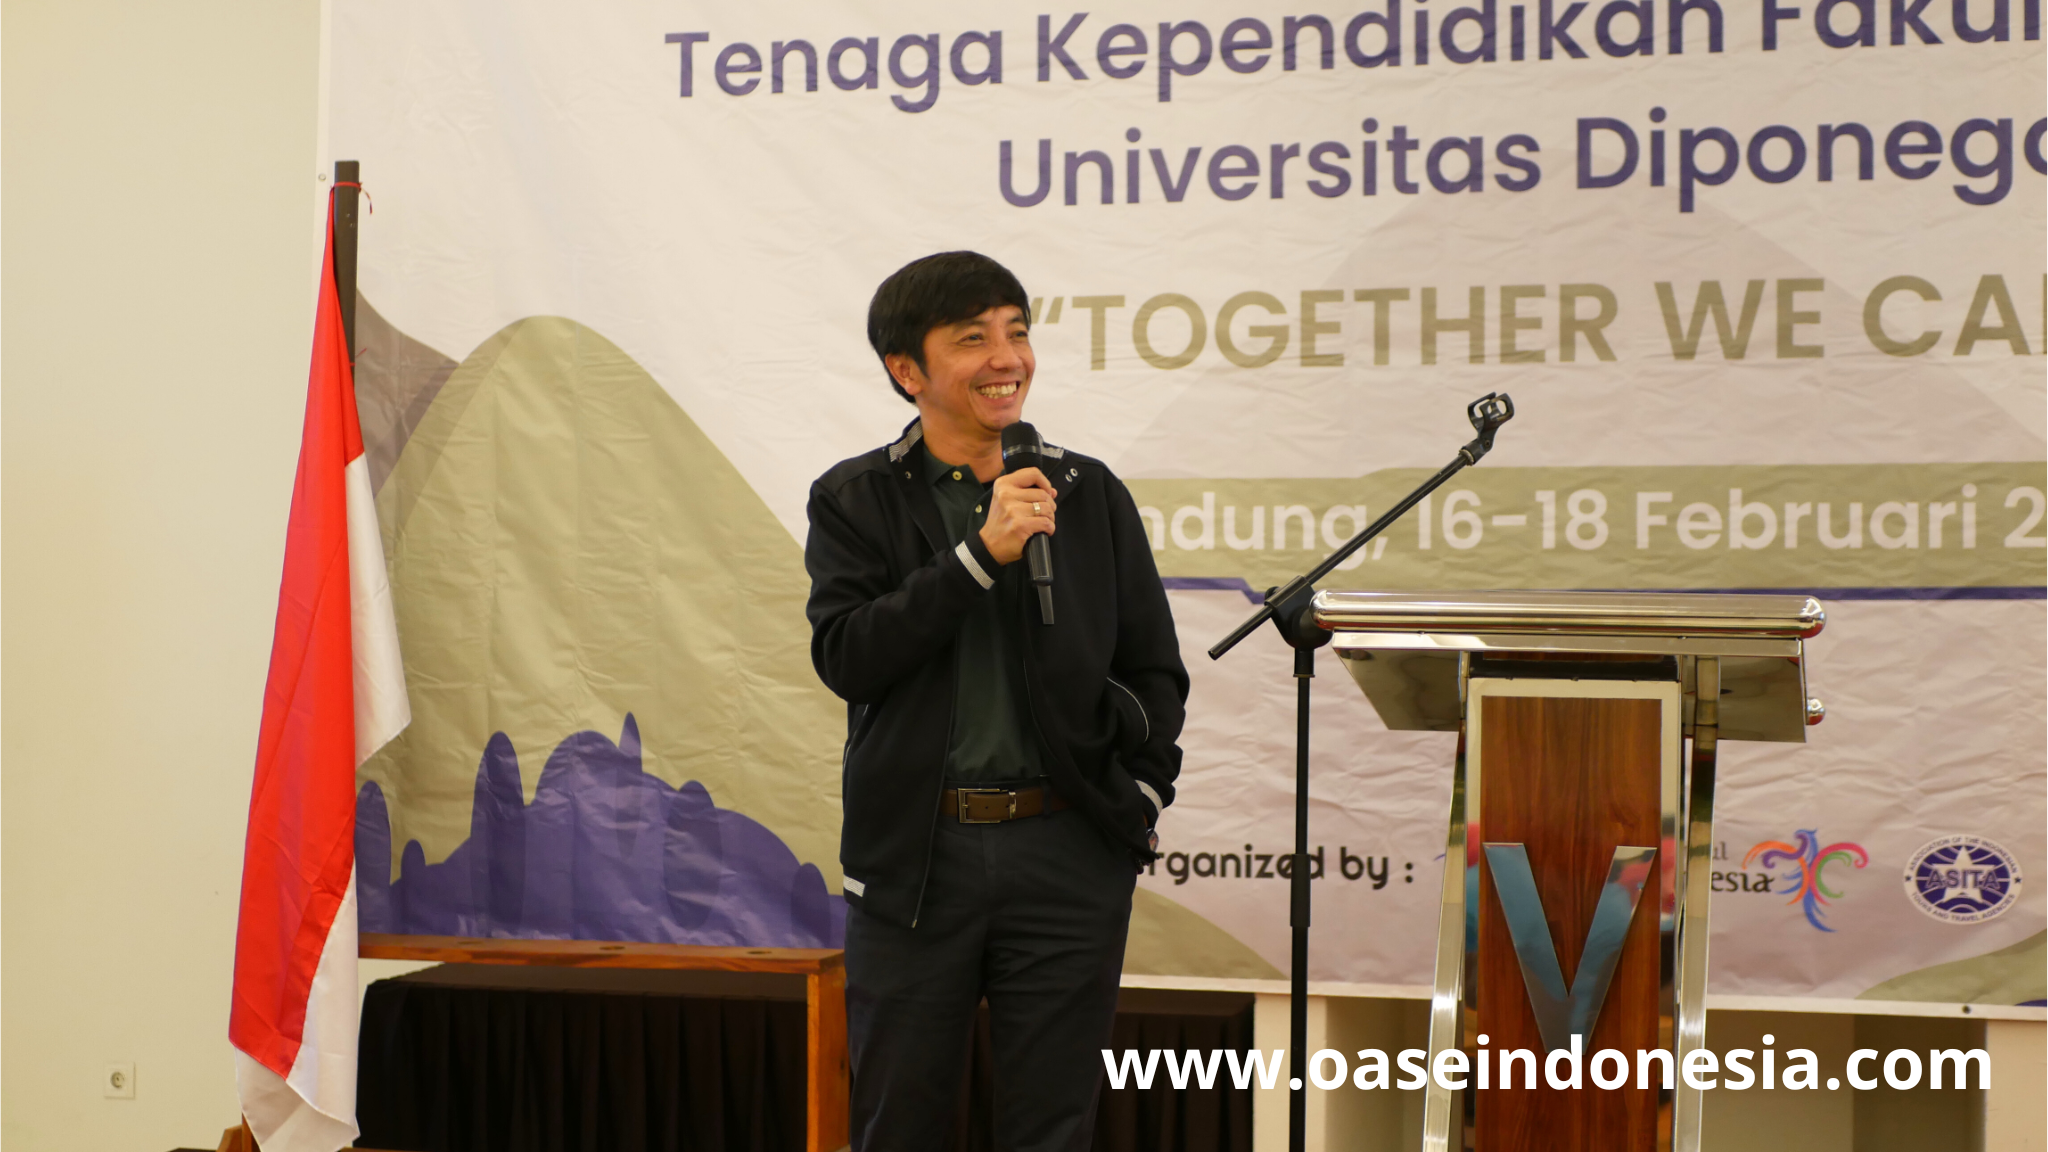 FT UNDIP Gathering ke Bandung Bersama OASE Indonesia